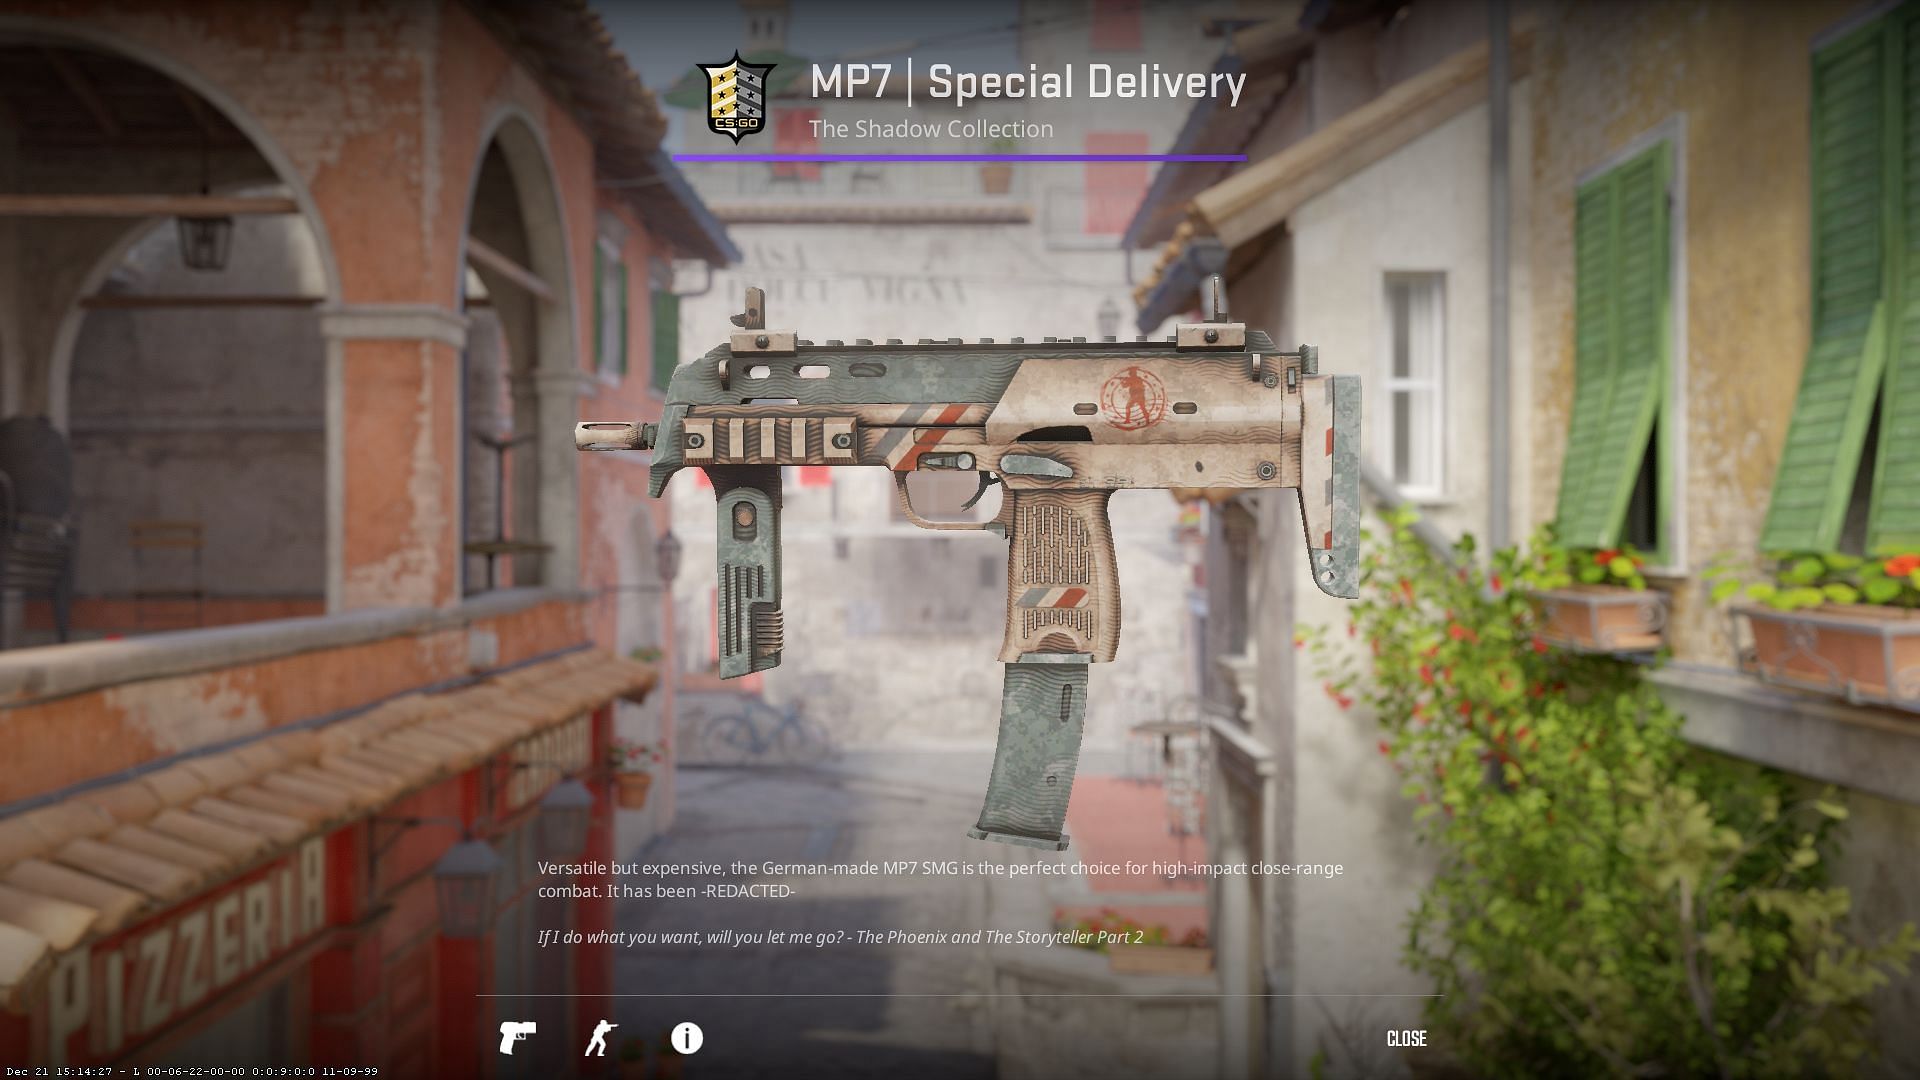 MP7 Special Delivery (Image via Valve)